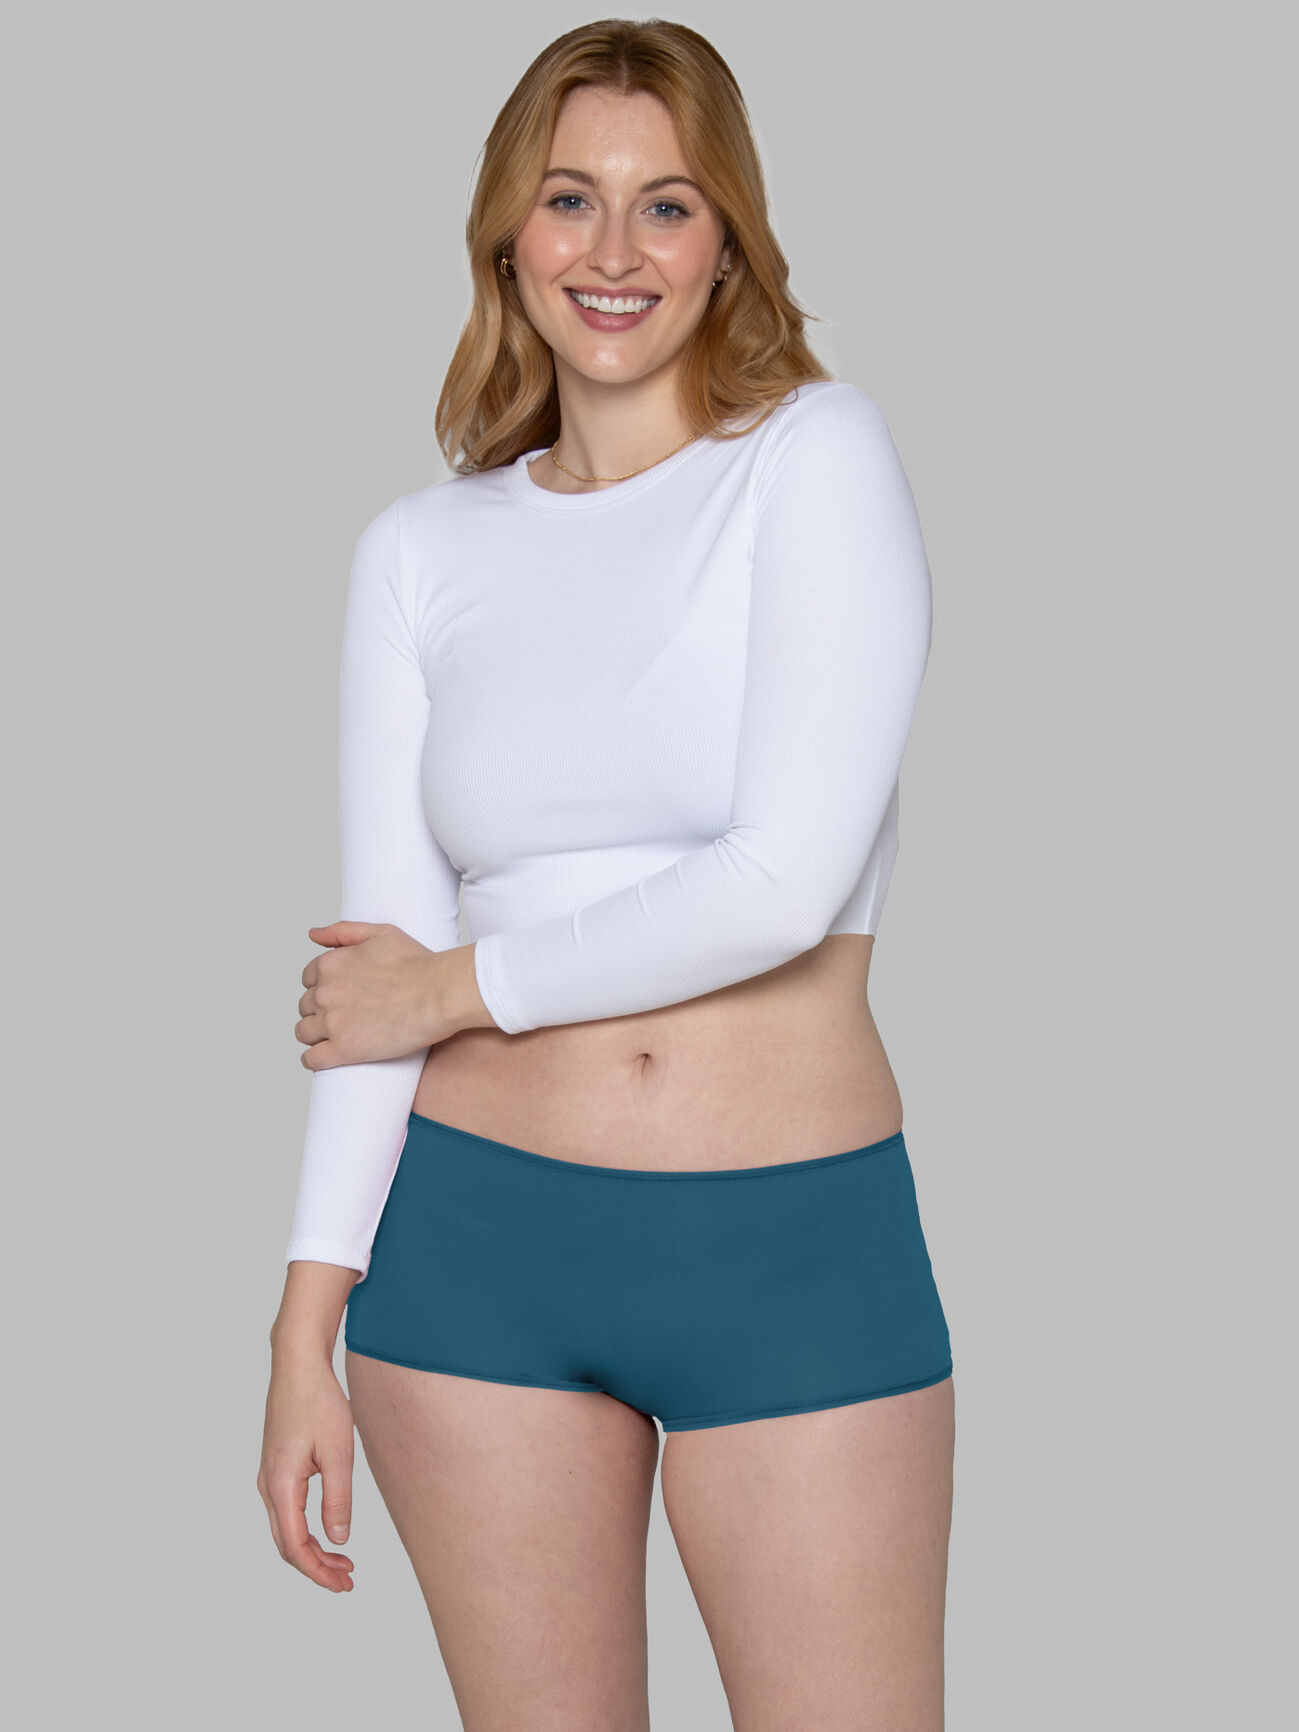 Essentials Women's Cotton Boyshort Underwear (Available in Plus  Size), Pack of 5